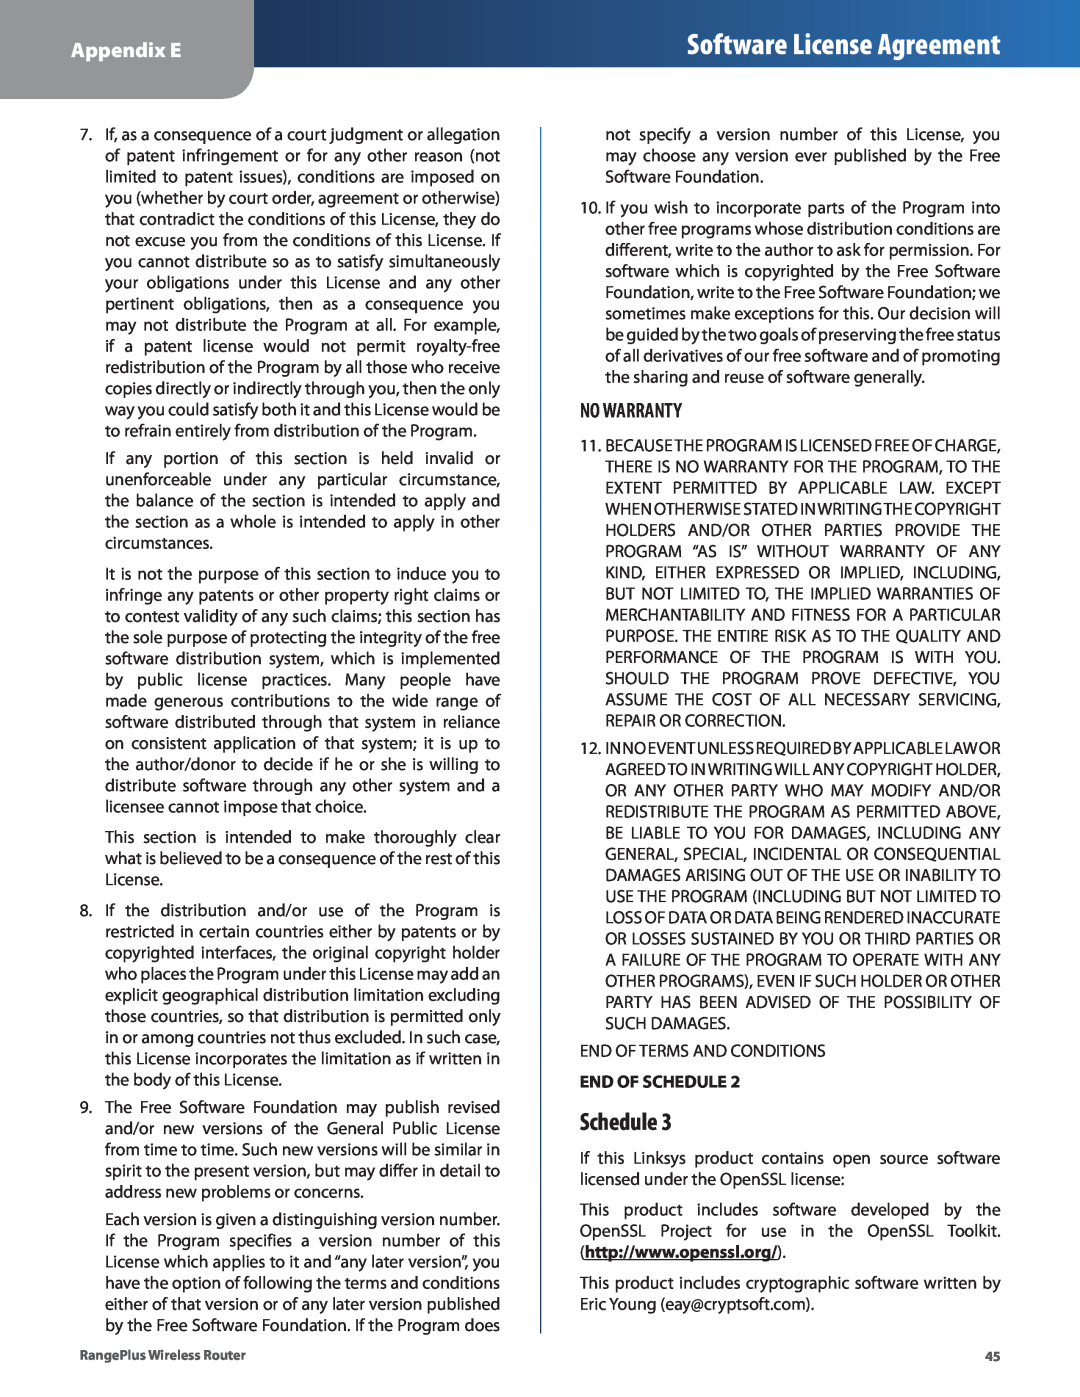 Cisco Systems WRT110 manual No Warranty, Software License Agreement, Schedule, Appendix E 